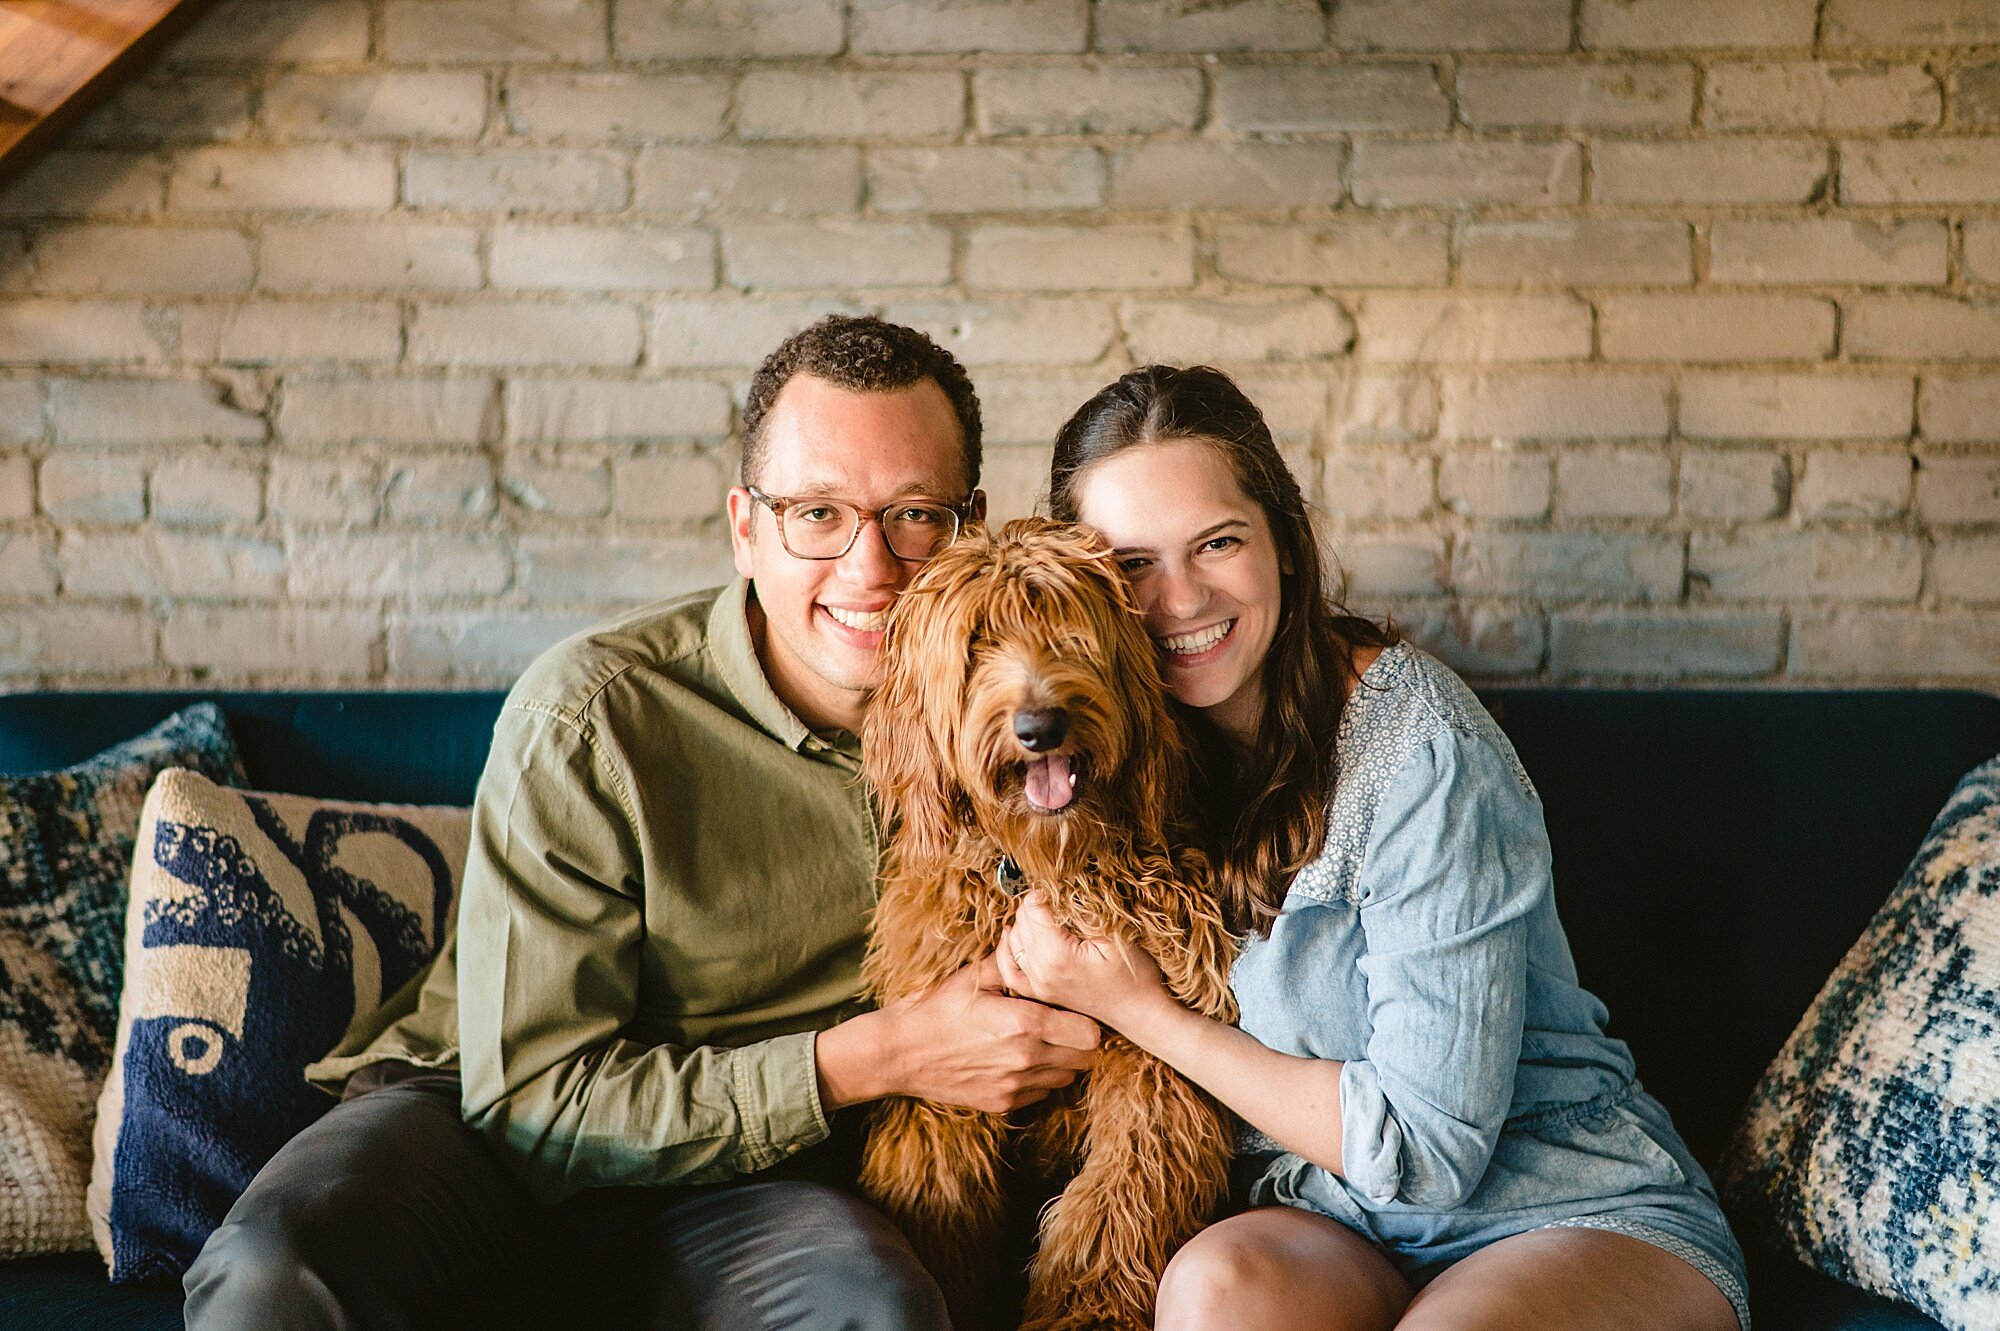 Grand Rapids Pet Photography - Couples portraits by Ryan Inman 9.jpg